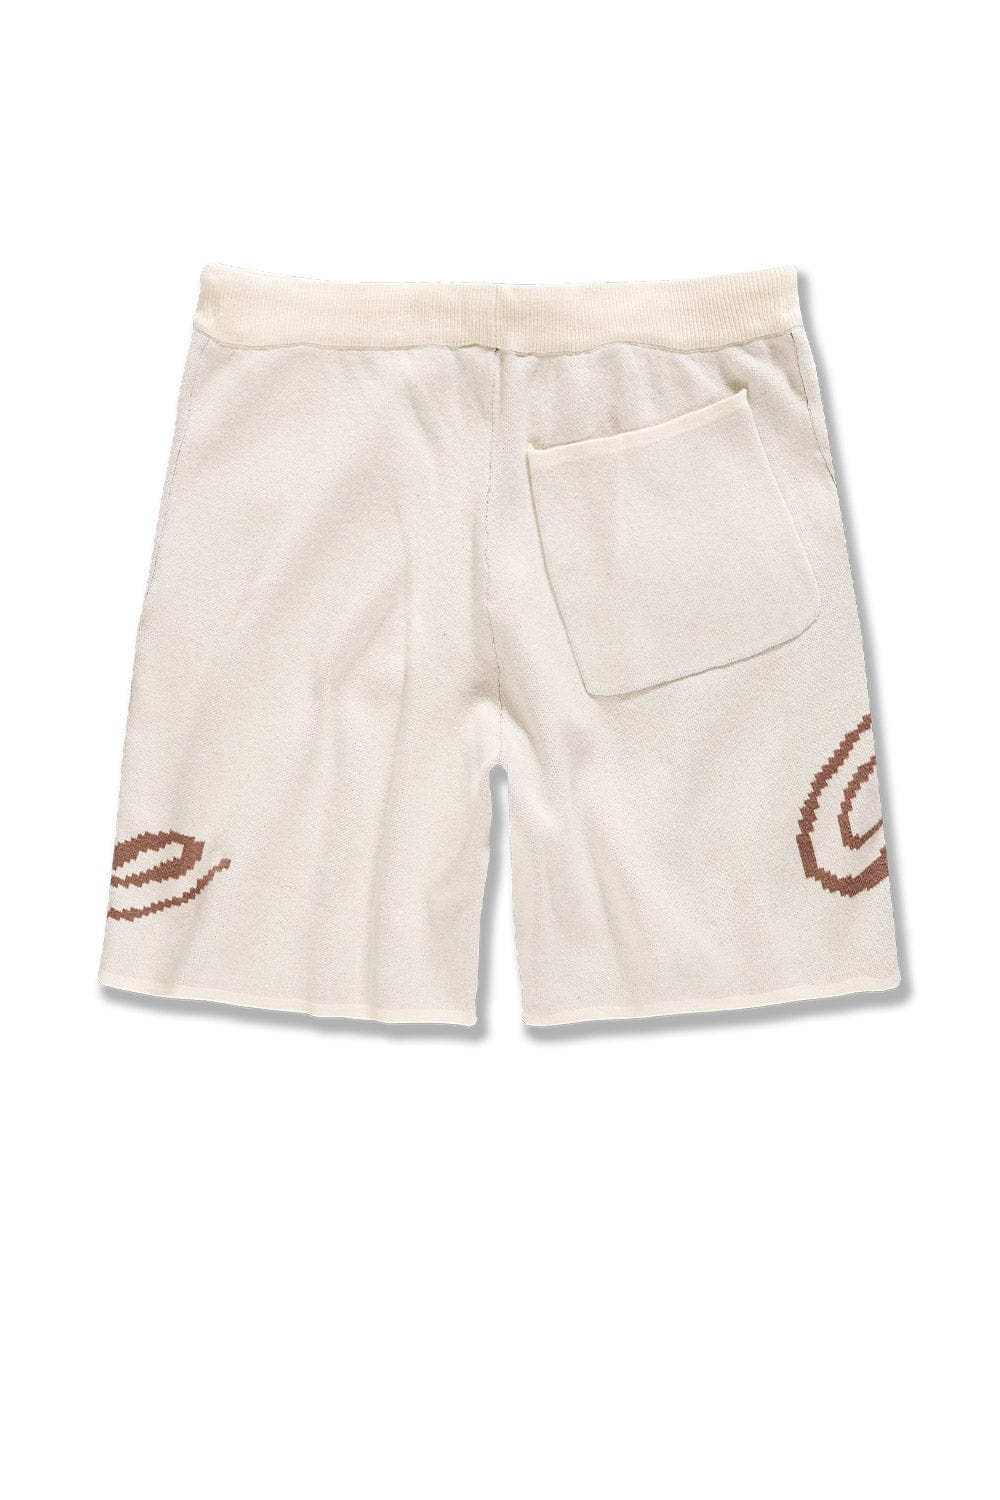 Jordan Craig Retro - Paradise Knit Shorts (Cream)